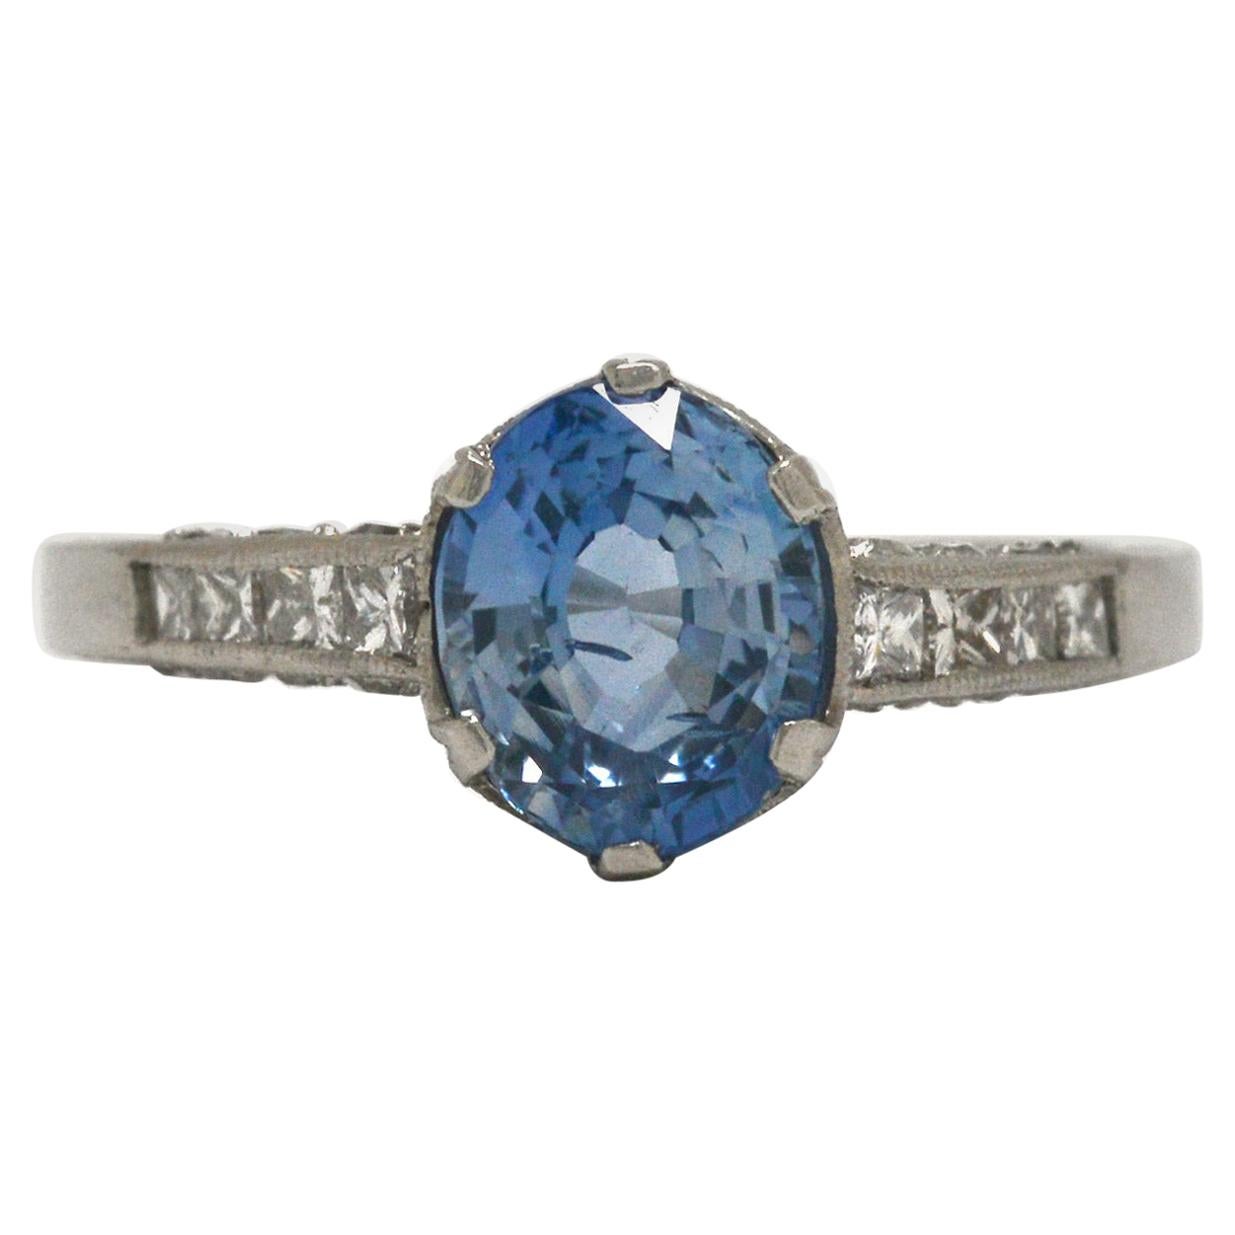 Vintage Ceylon Sapphire Engagement Ring Solitaire Oval Gemstone Platinum Diamond